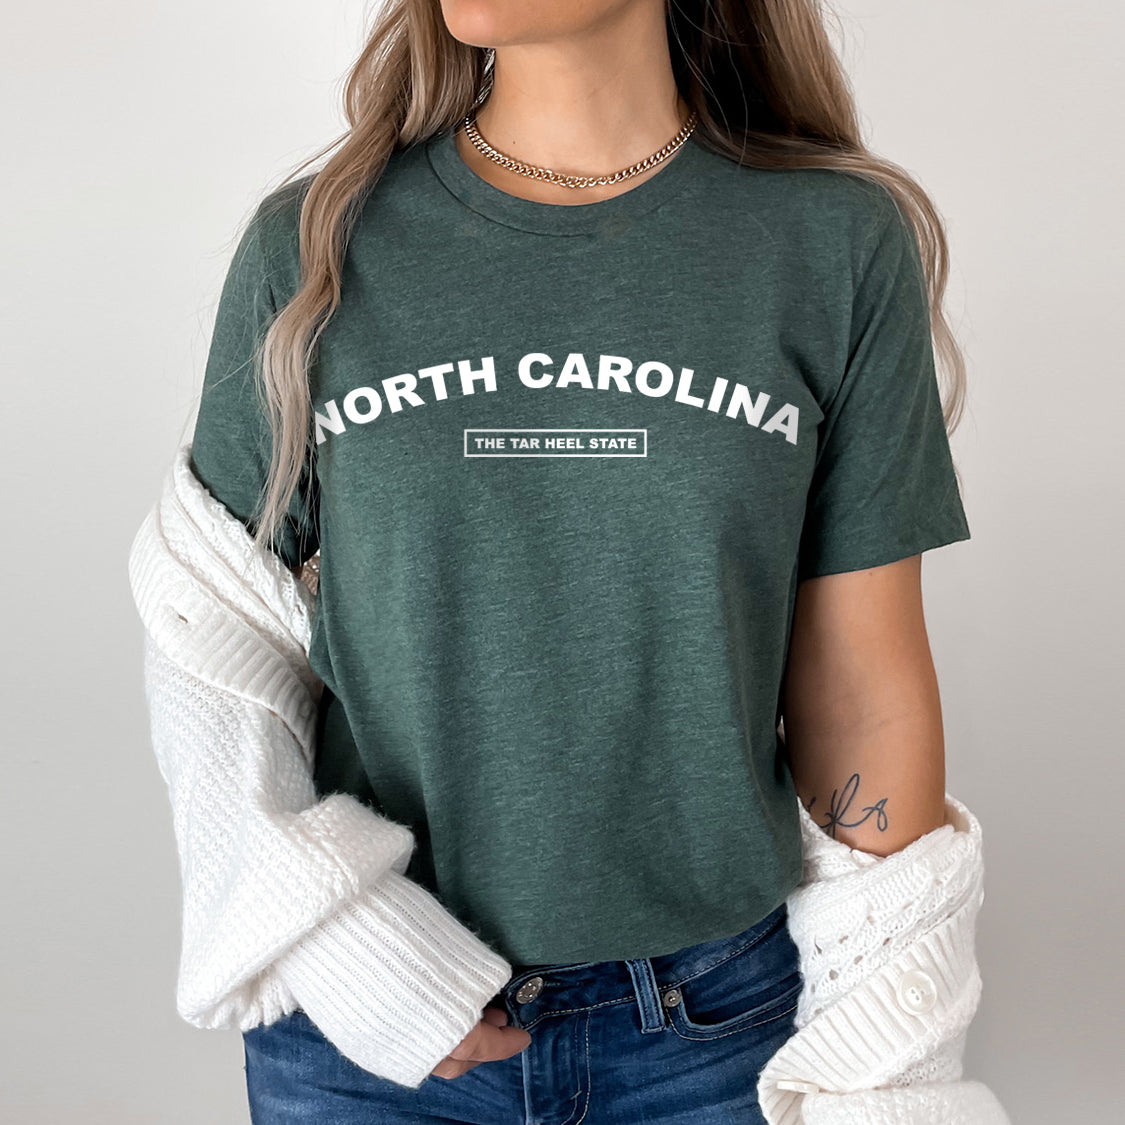 North Carolina The Tar Heel State T-shirt - United States Name & Slogan Minimal Design Printed Tee Shirt